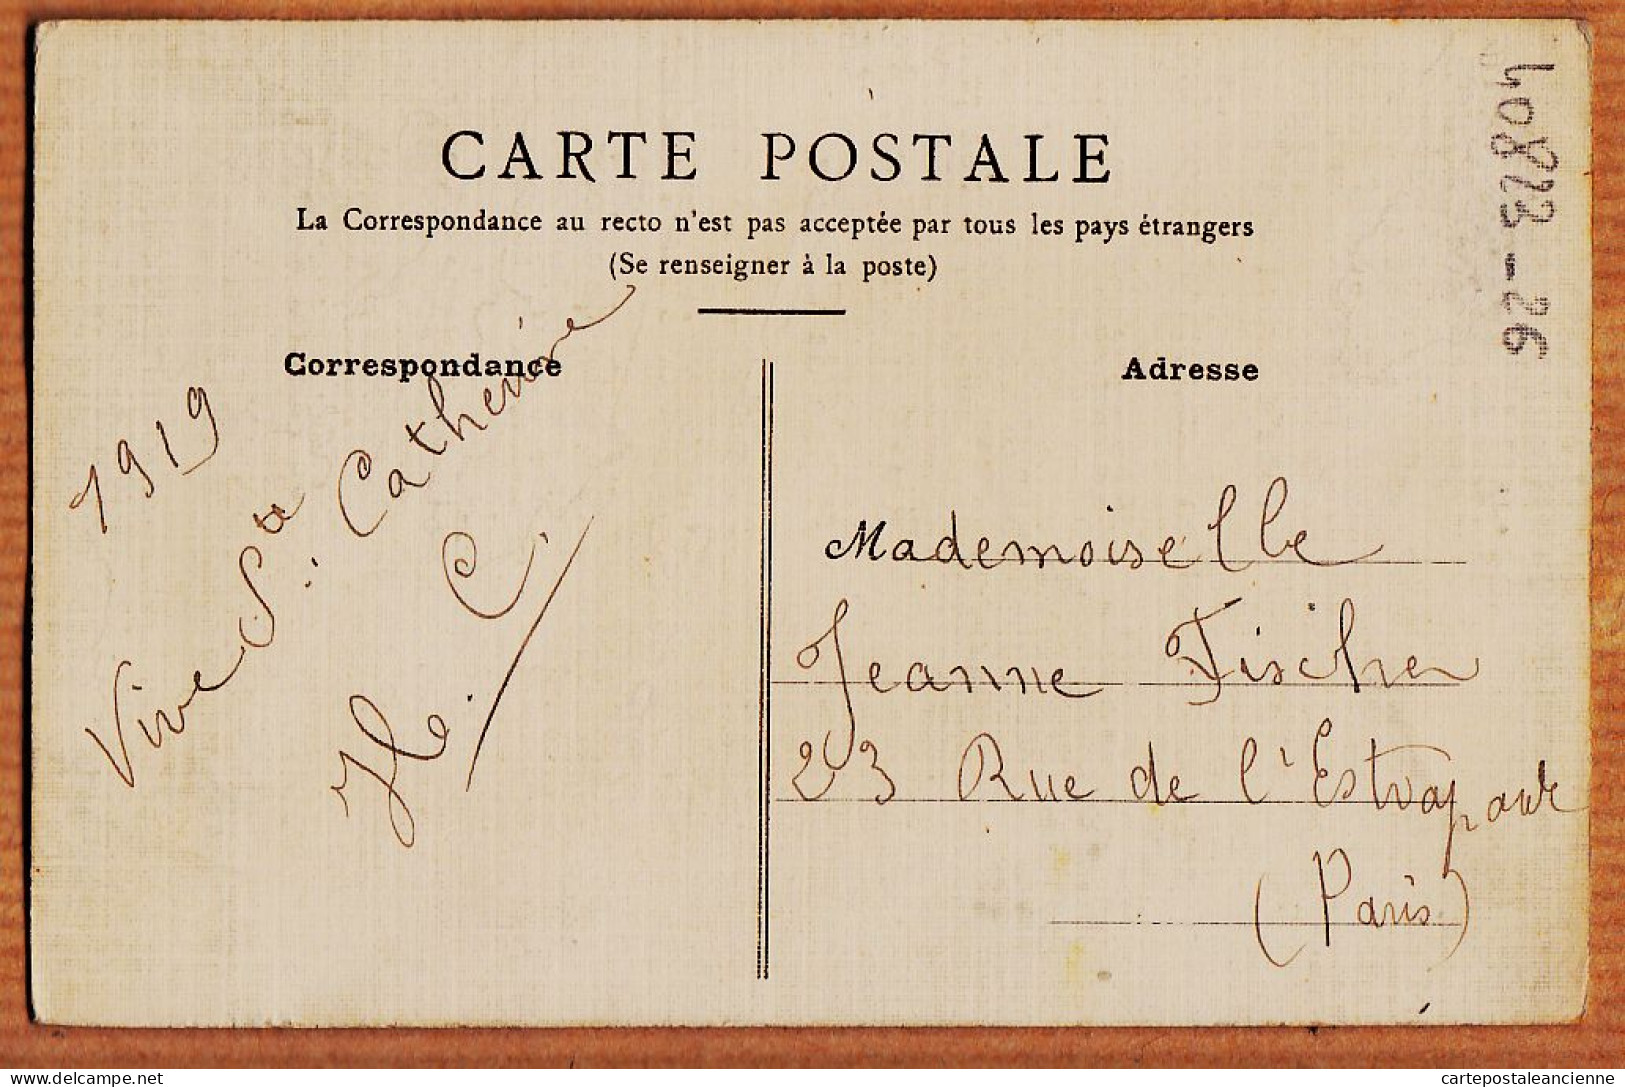 38849  / ⭐ Prière O SAINTE-CATHERINE Ste 1919 à Jeanne FISCHEN Rue De L'Estragarde Paris -Carte Toilée  - Sainte-Catherine